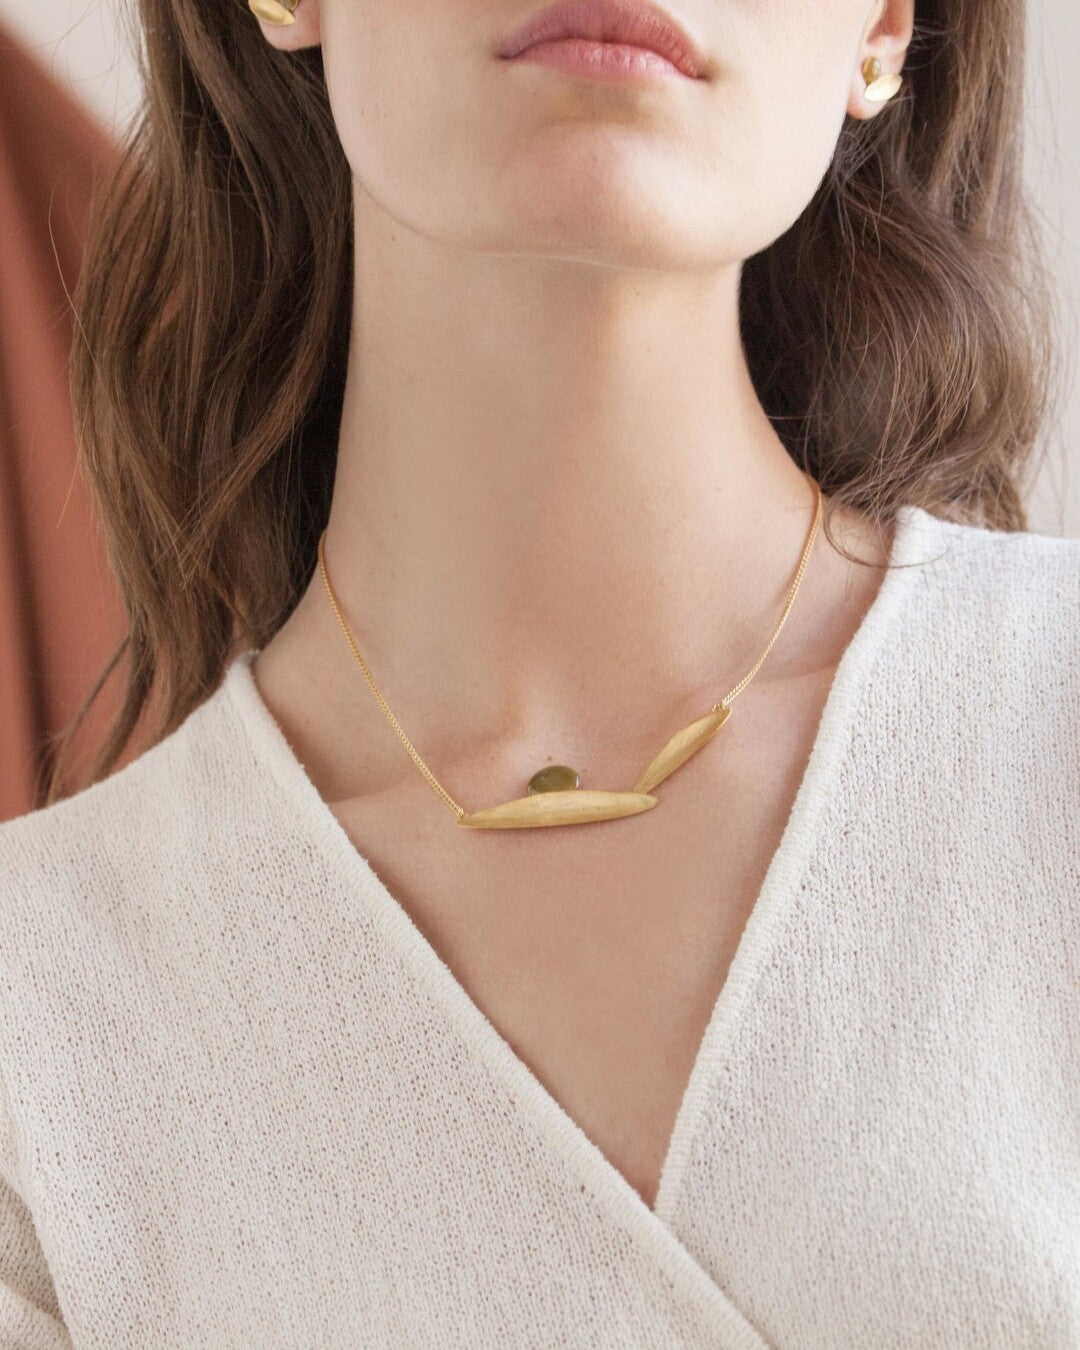 Handmade golden and enameled necklace - Joidart